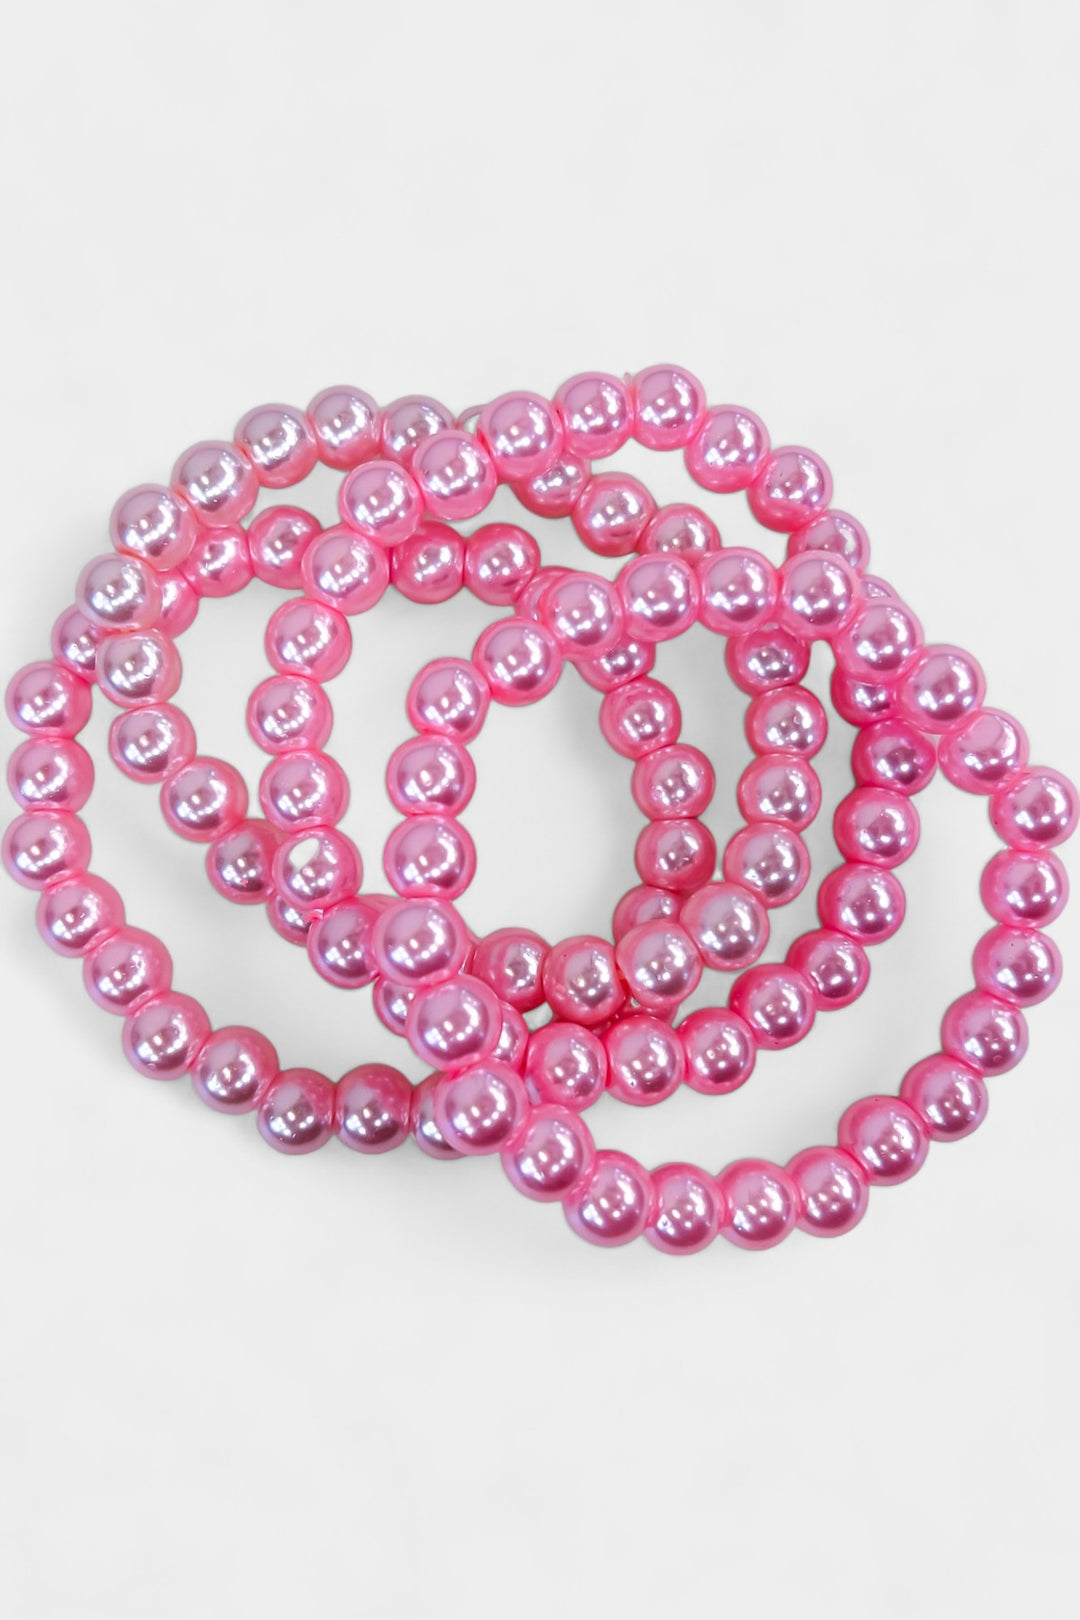 Pink Pearl Stretch Bracelets